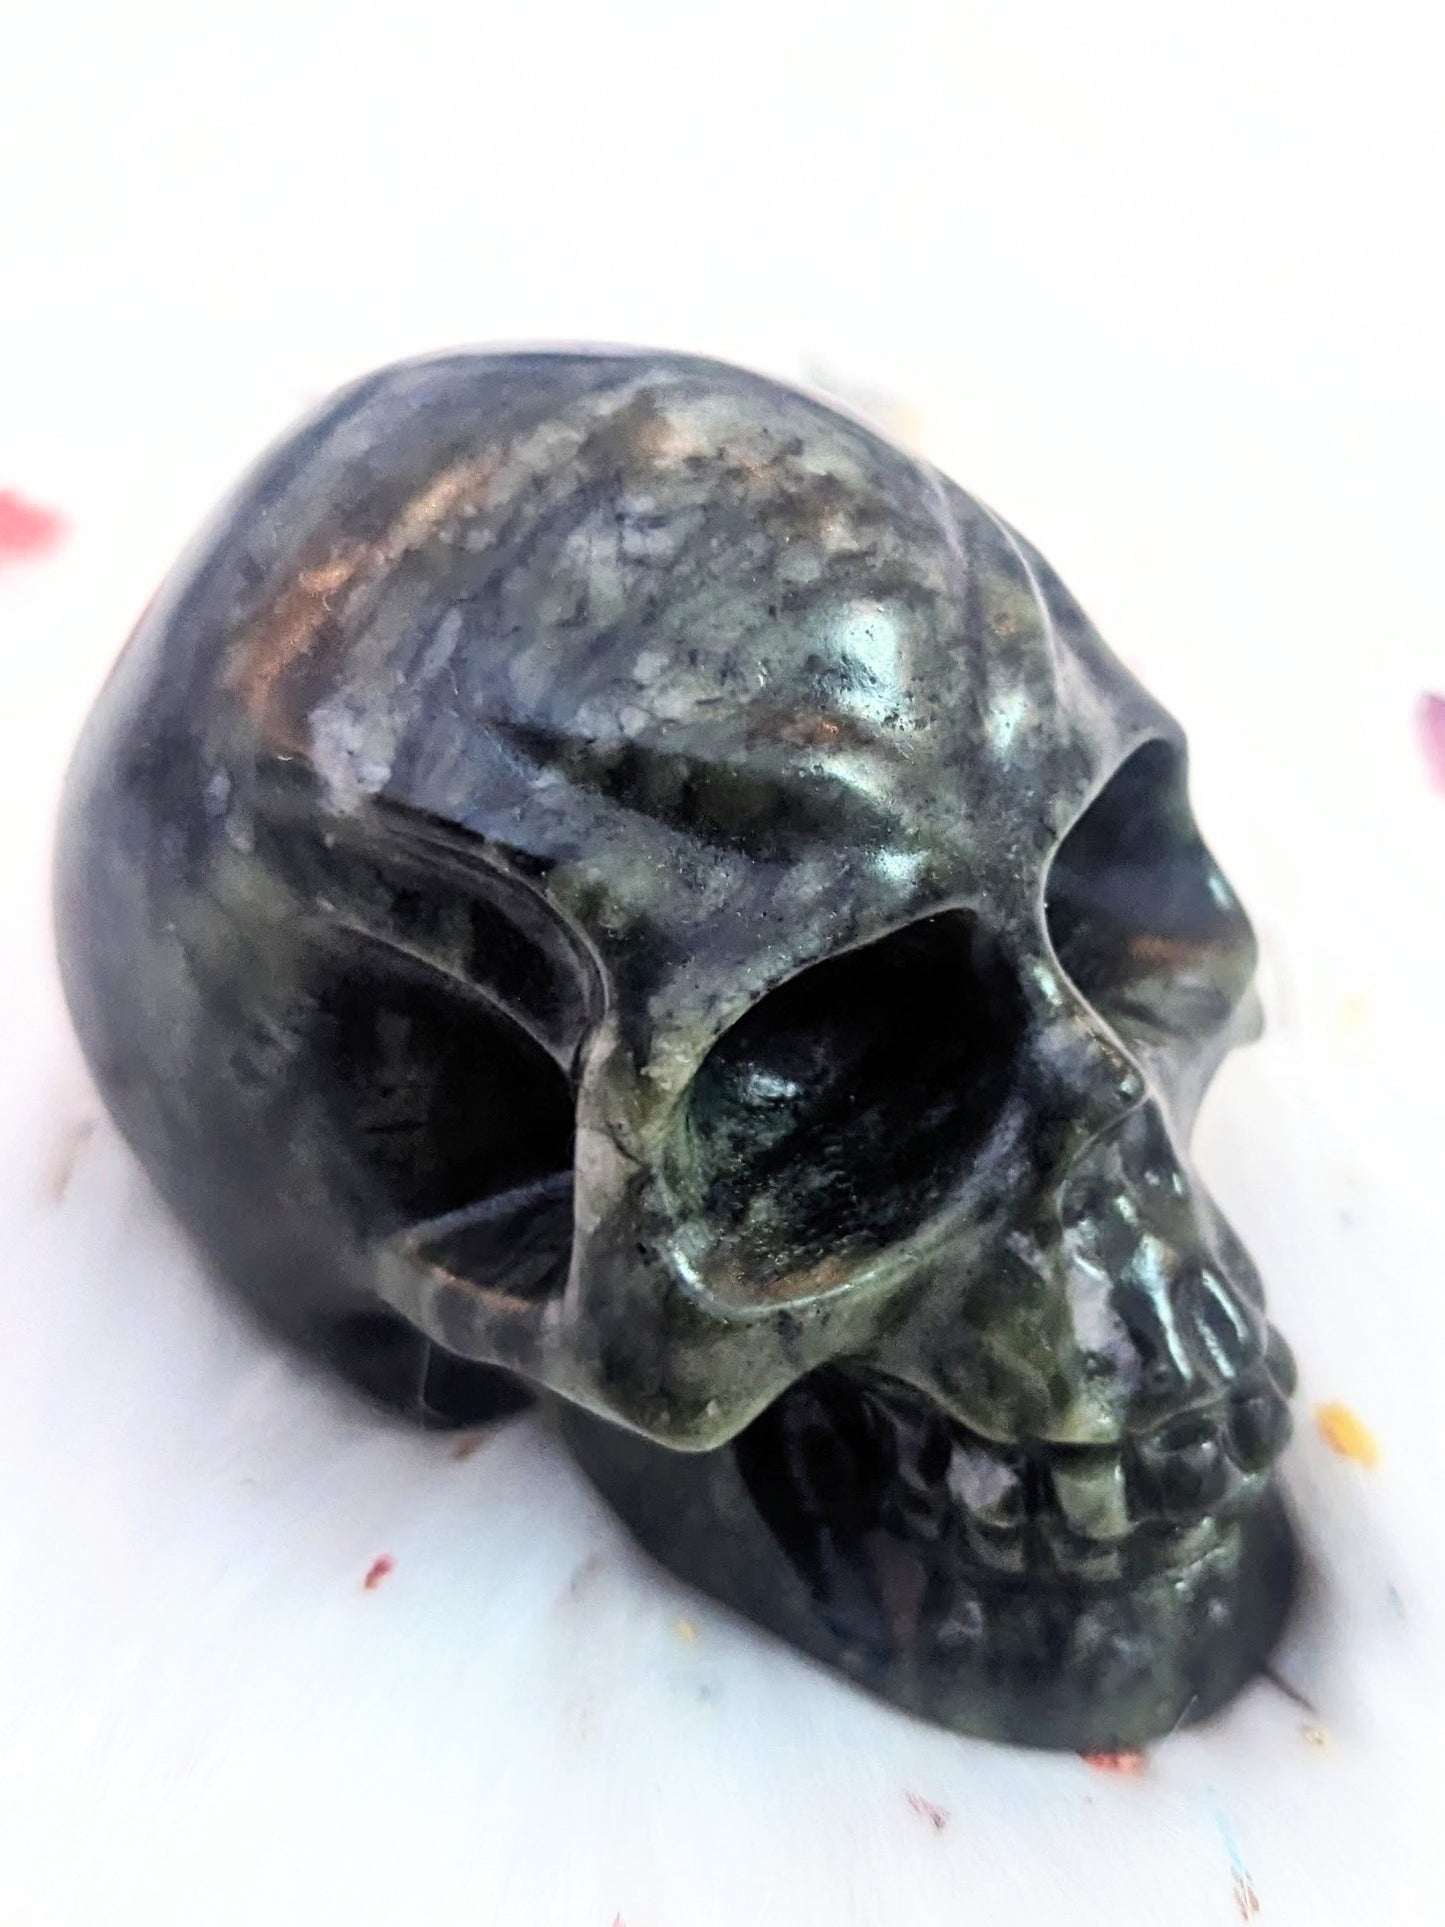 3" inches Serpentine Skull